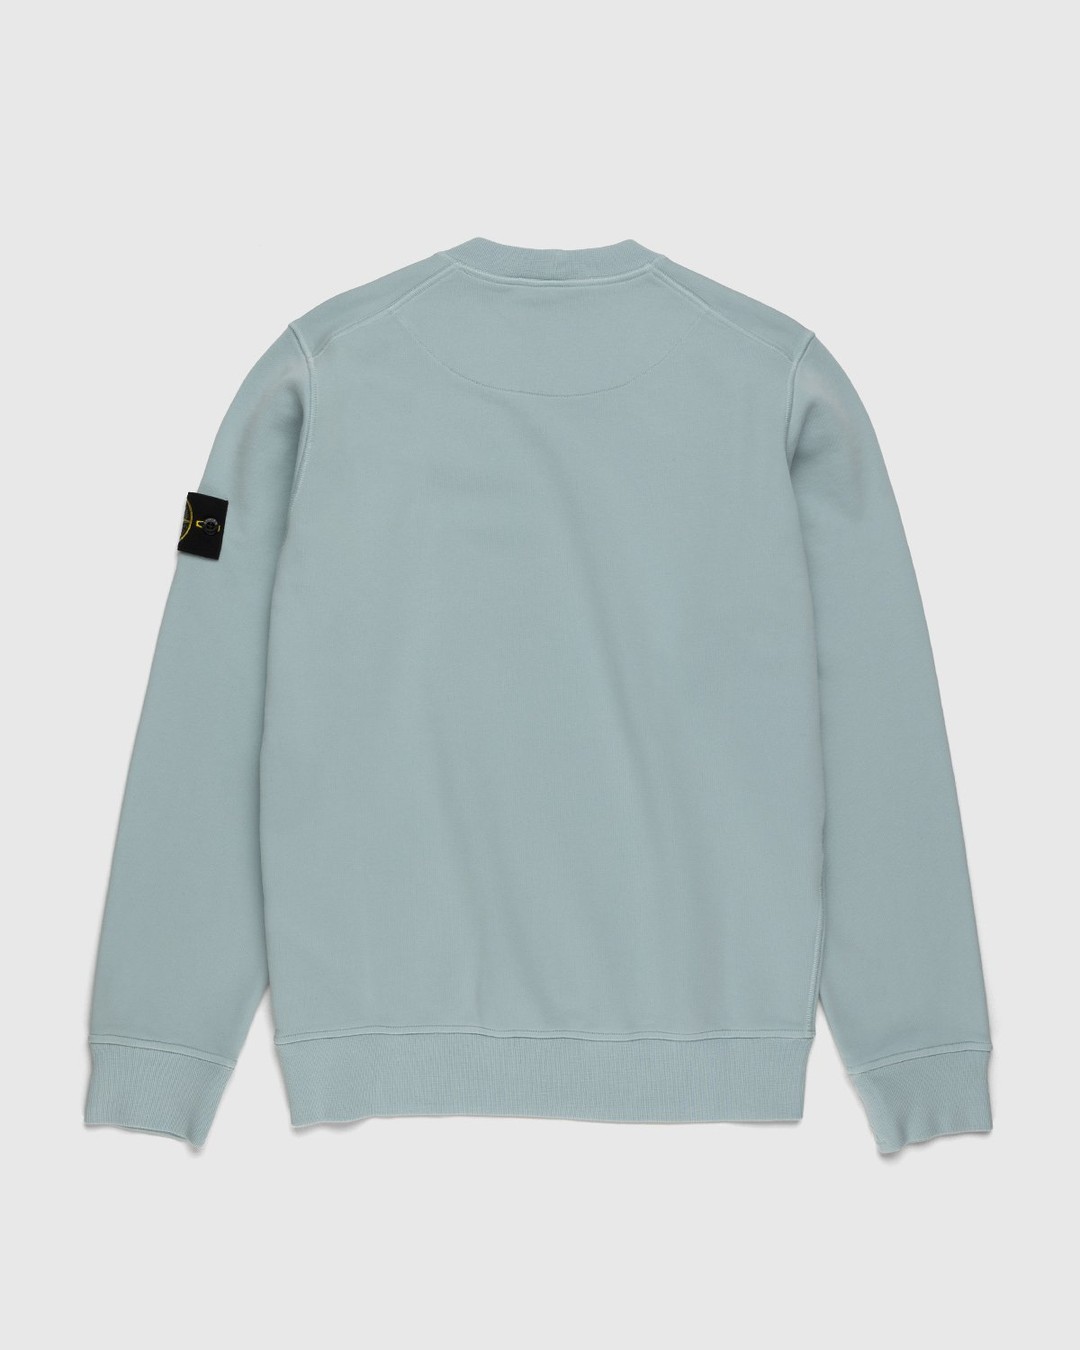 Stone Island – 63051 Garment-Dyed Cotton Fleece Crewneck Aqua - Sweats - Blue - Image 2